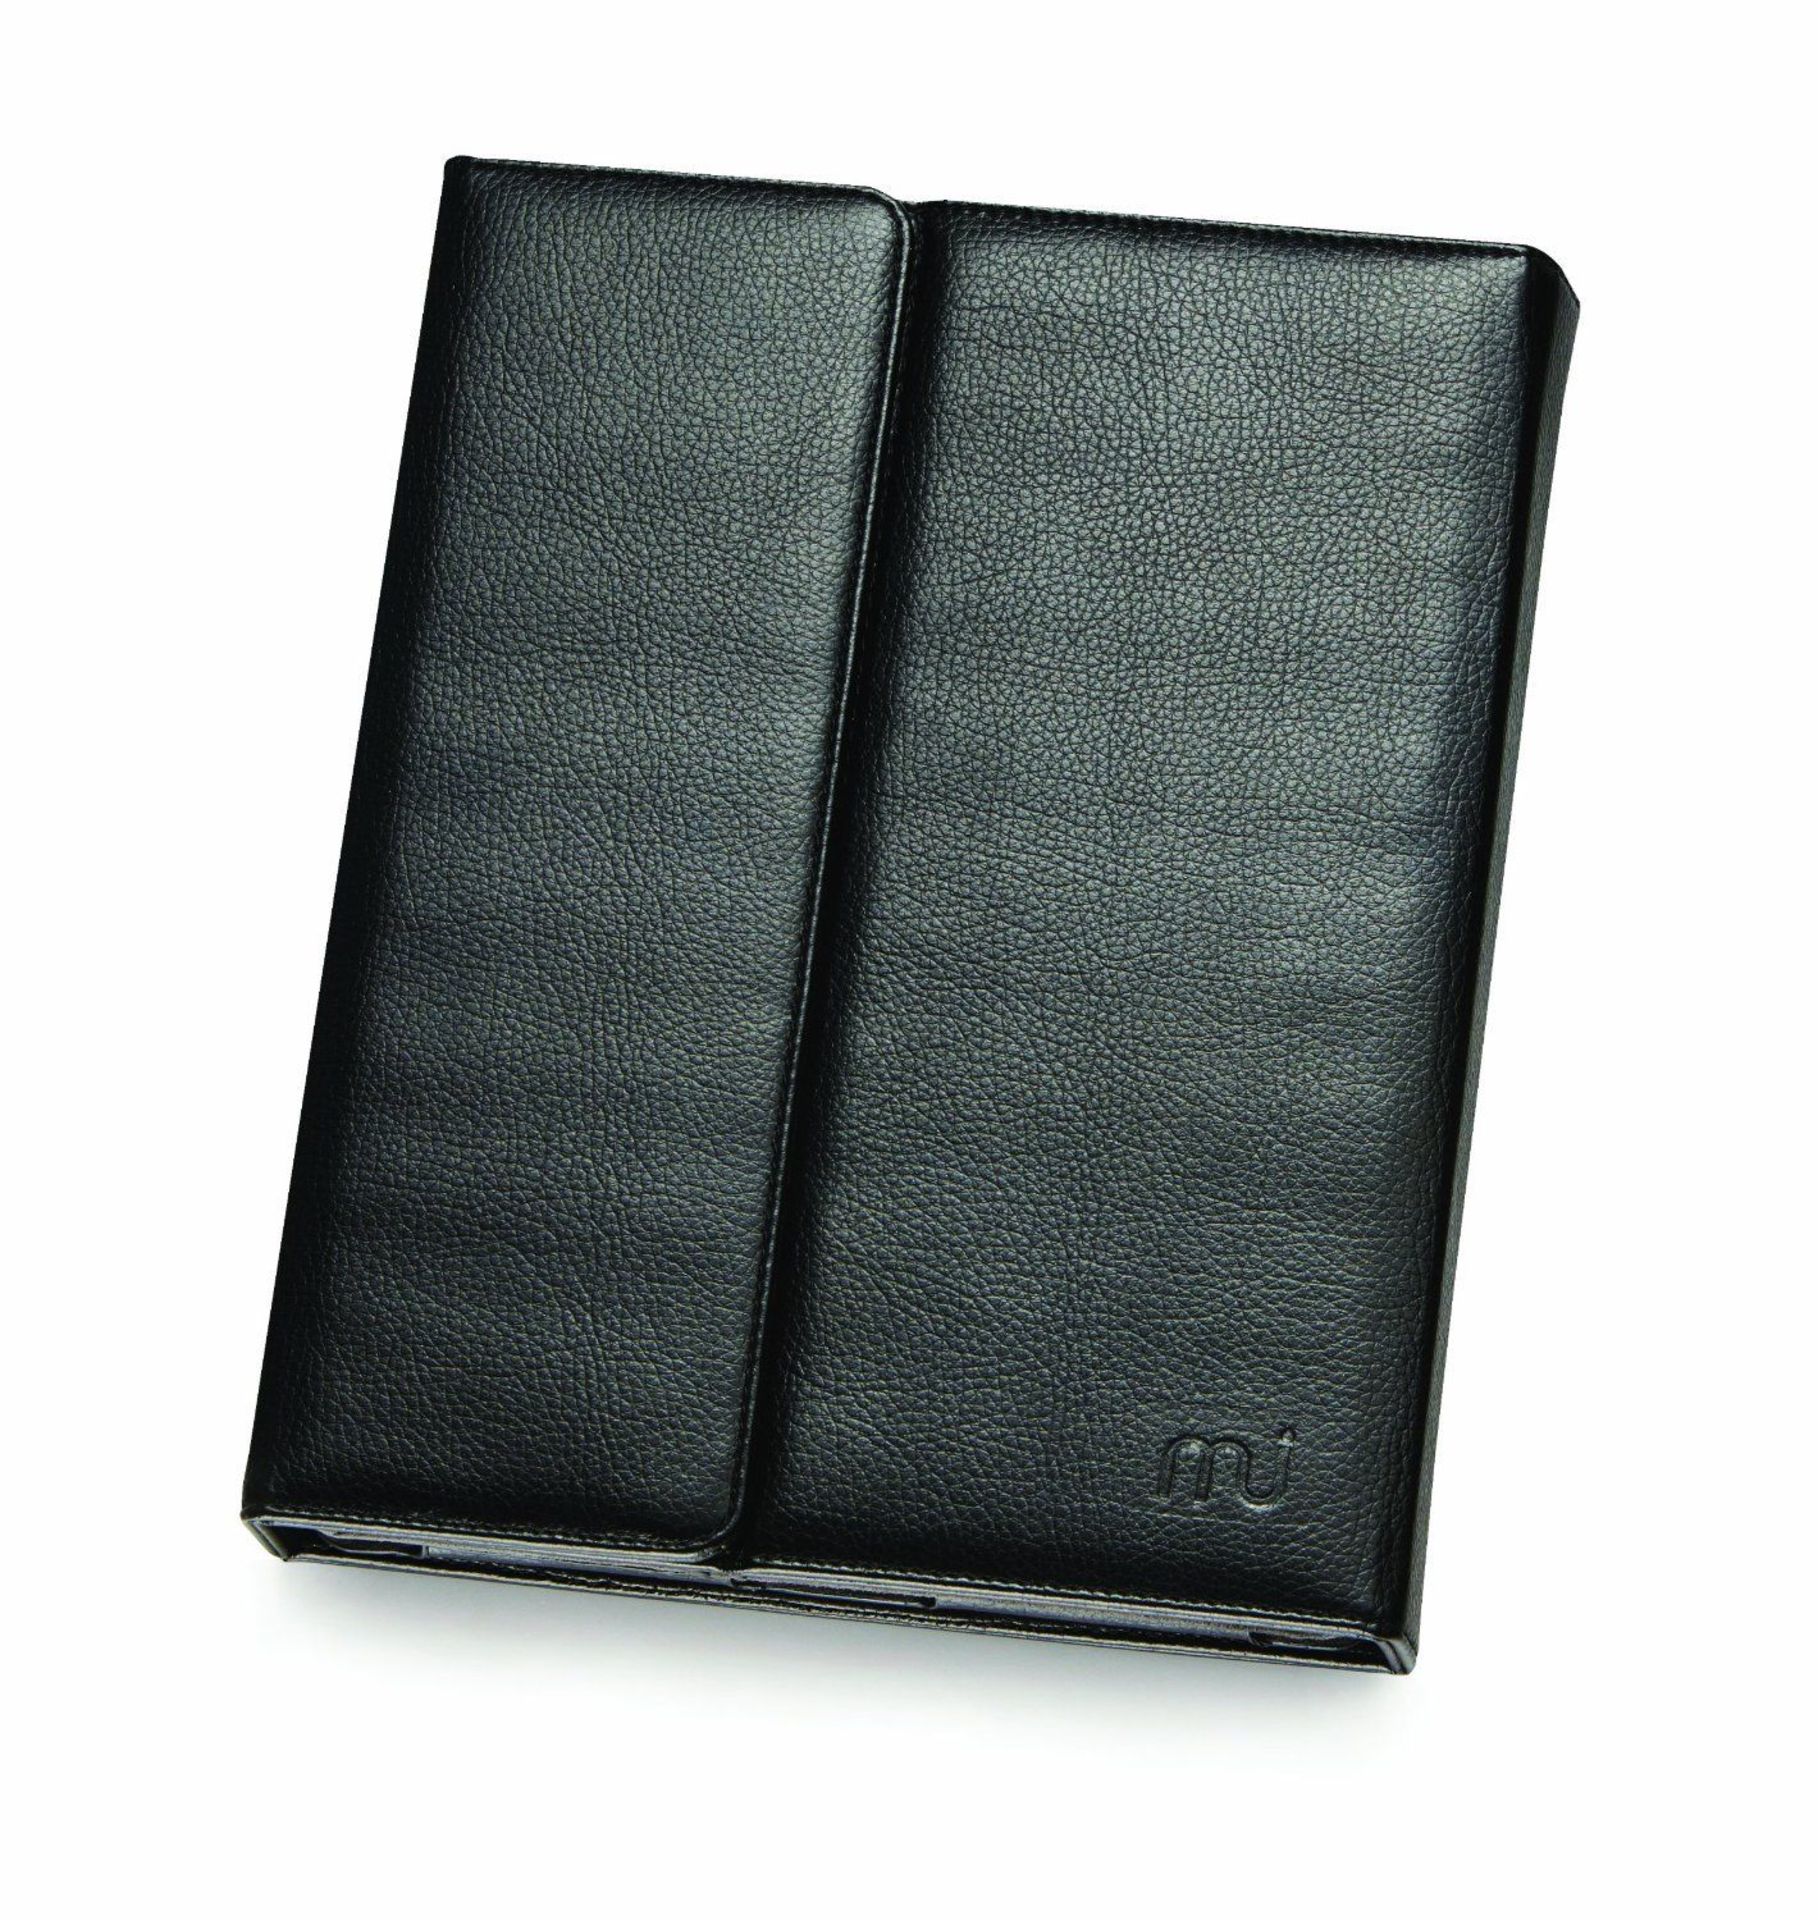 1 x Mi PU Leather IPAD CASE With Integrated Bluetooth 2.0 Keyboard - Wireless Keyboard, Upto 90 - Image 3 of 3